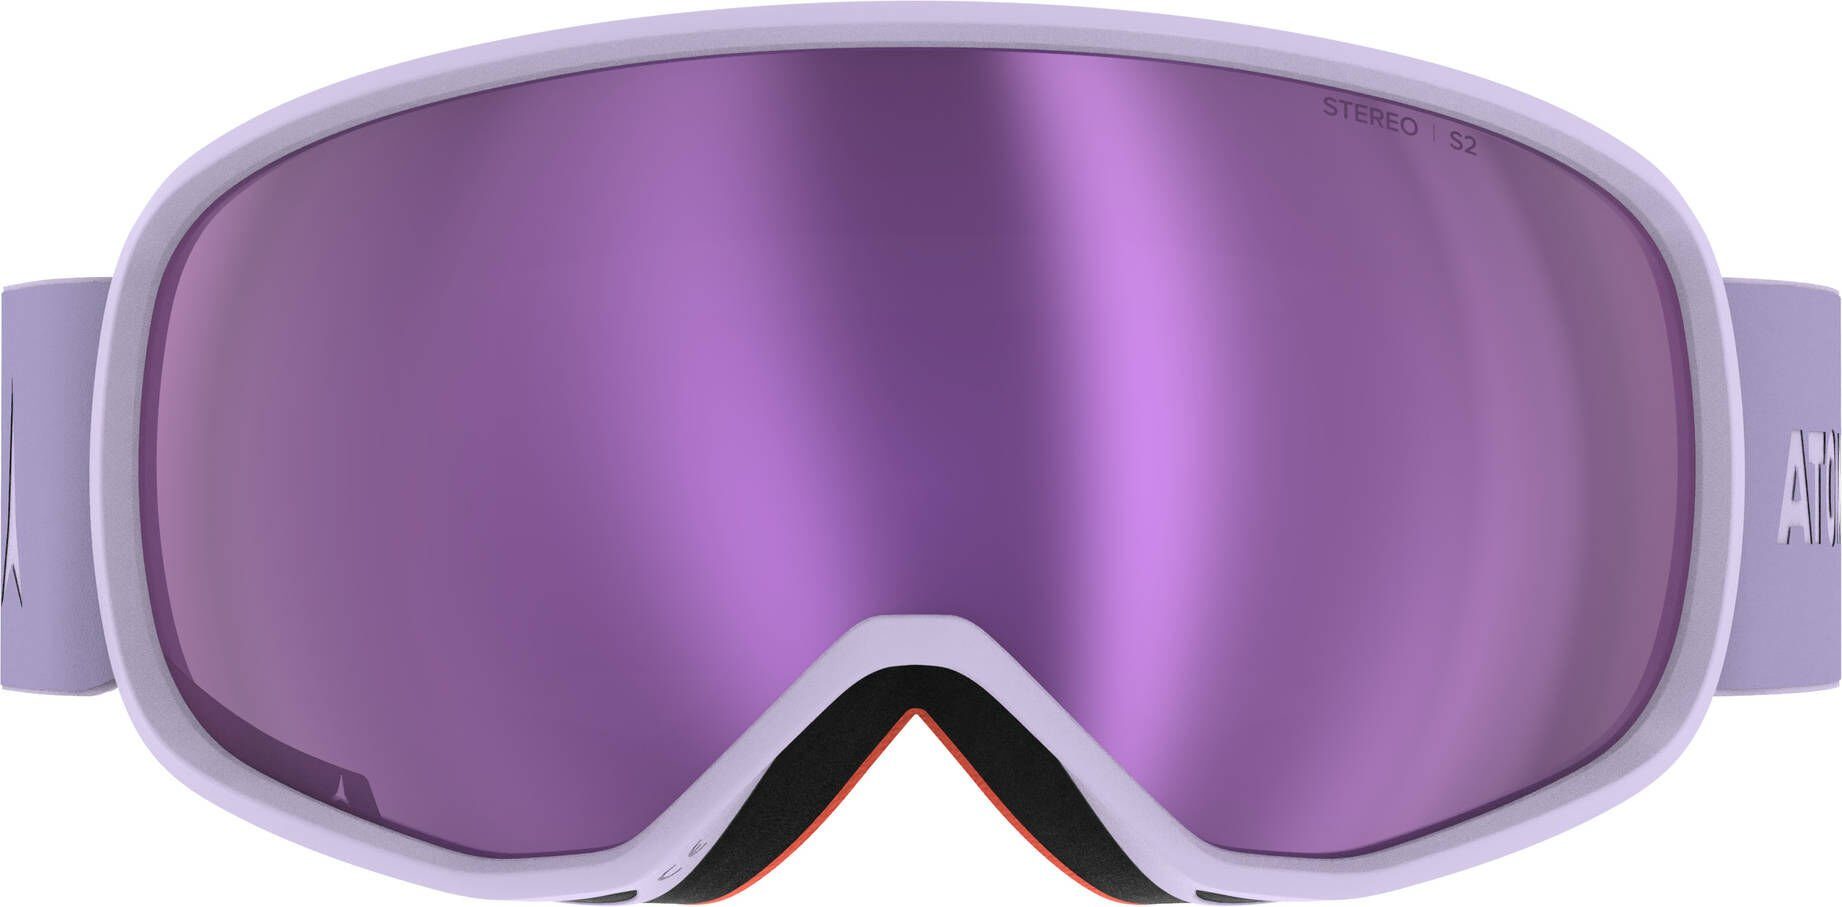 Atomic Skibrille Skibrille REVENT Lavender STEREO